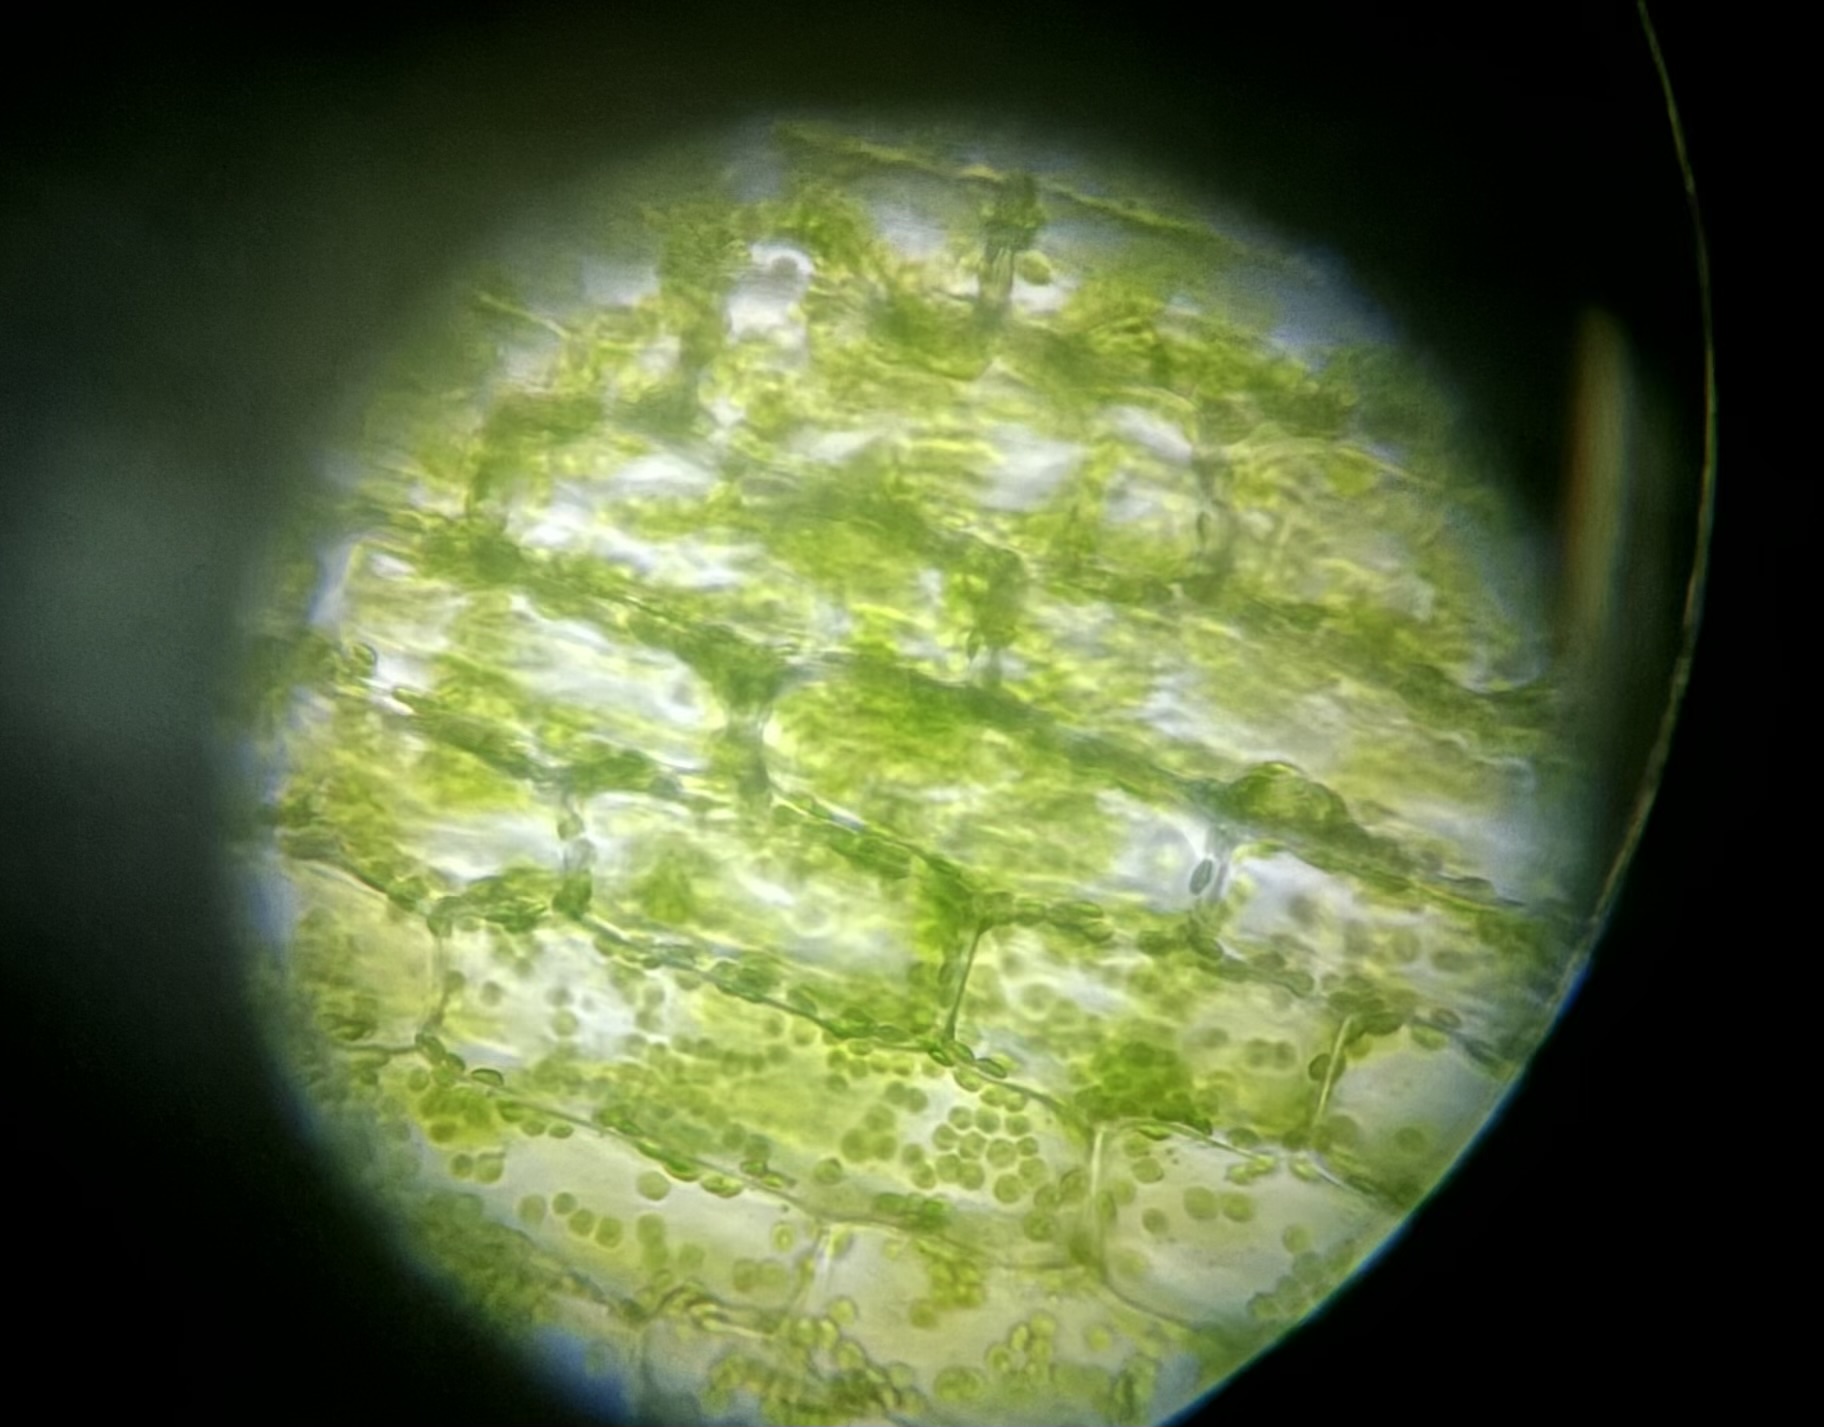 Pflanzenzelle fotografiert durch das Mikroskop